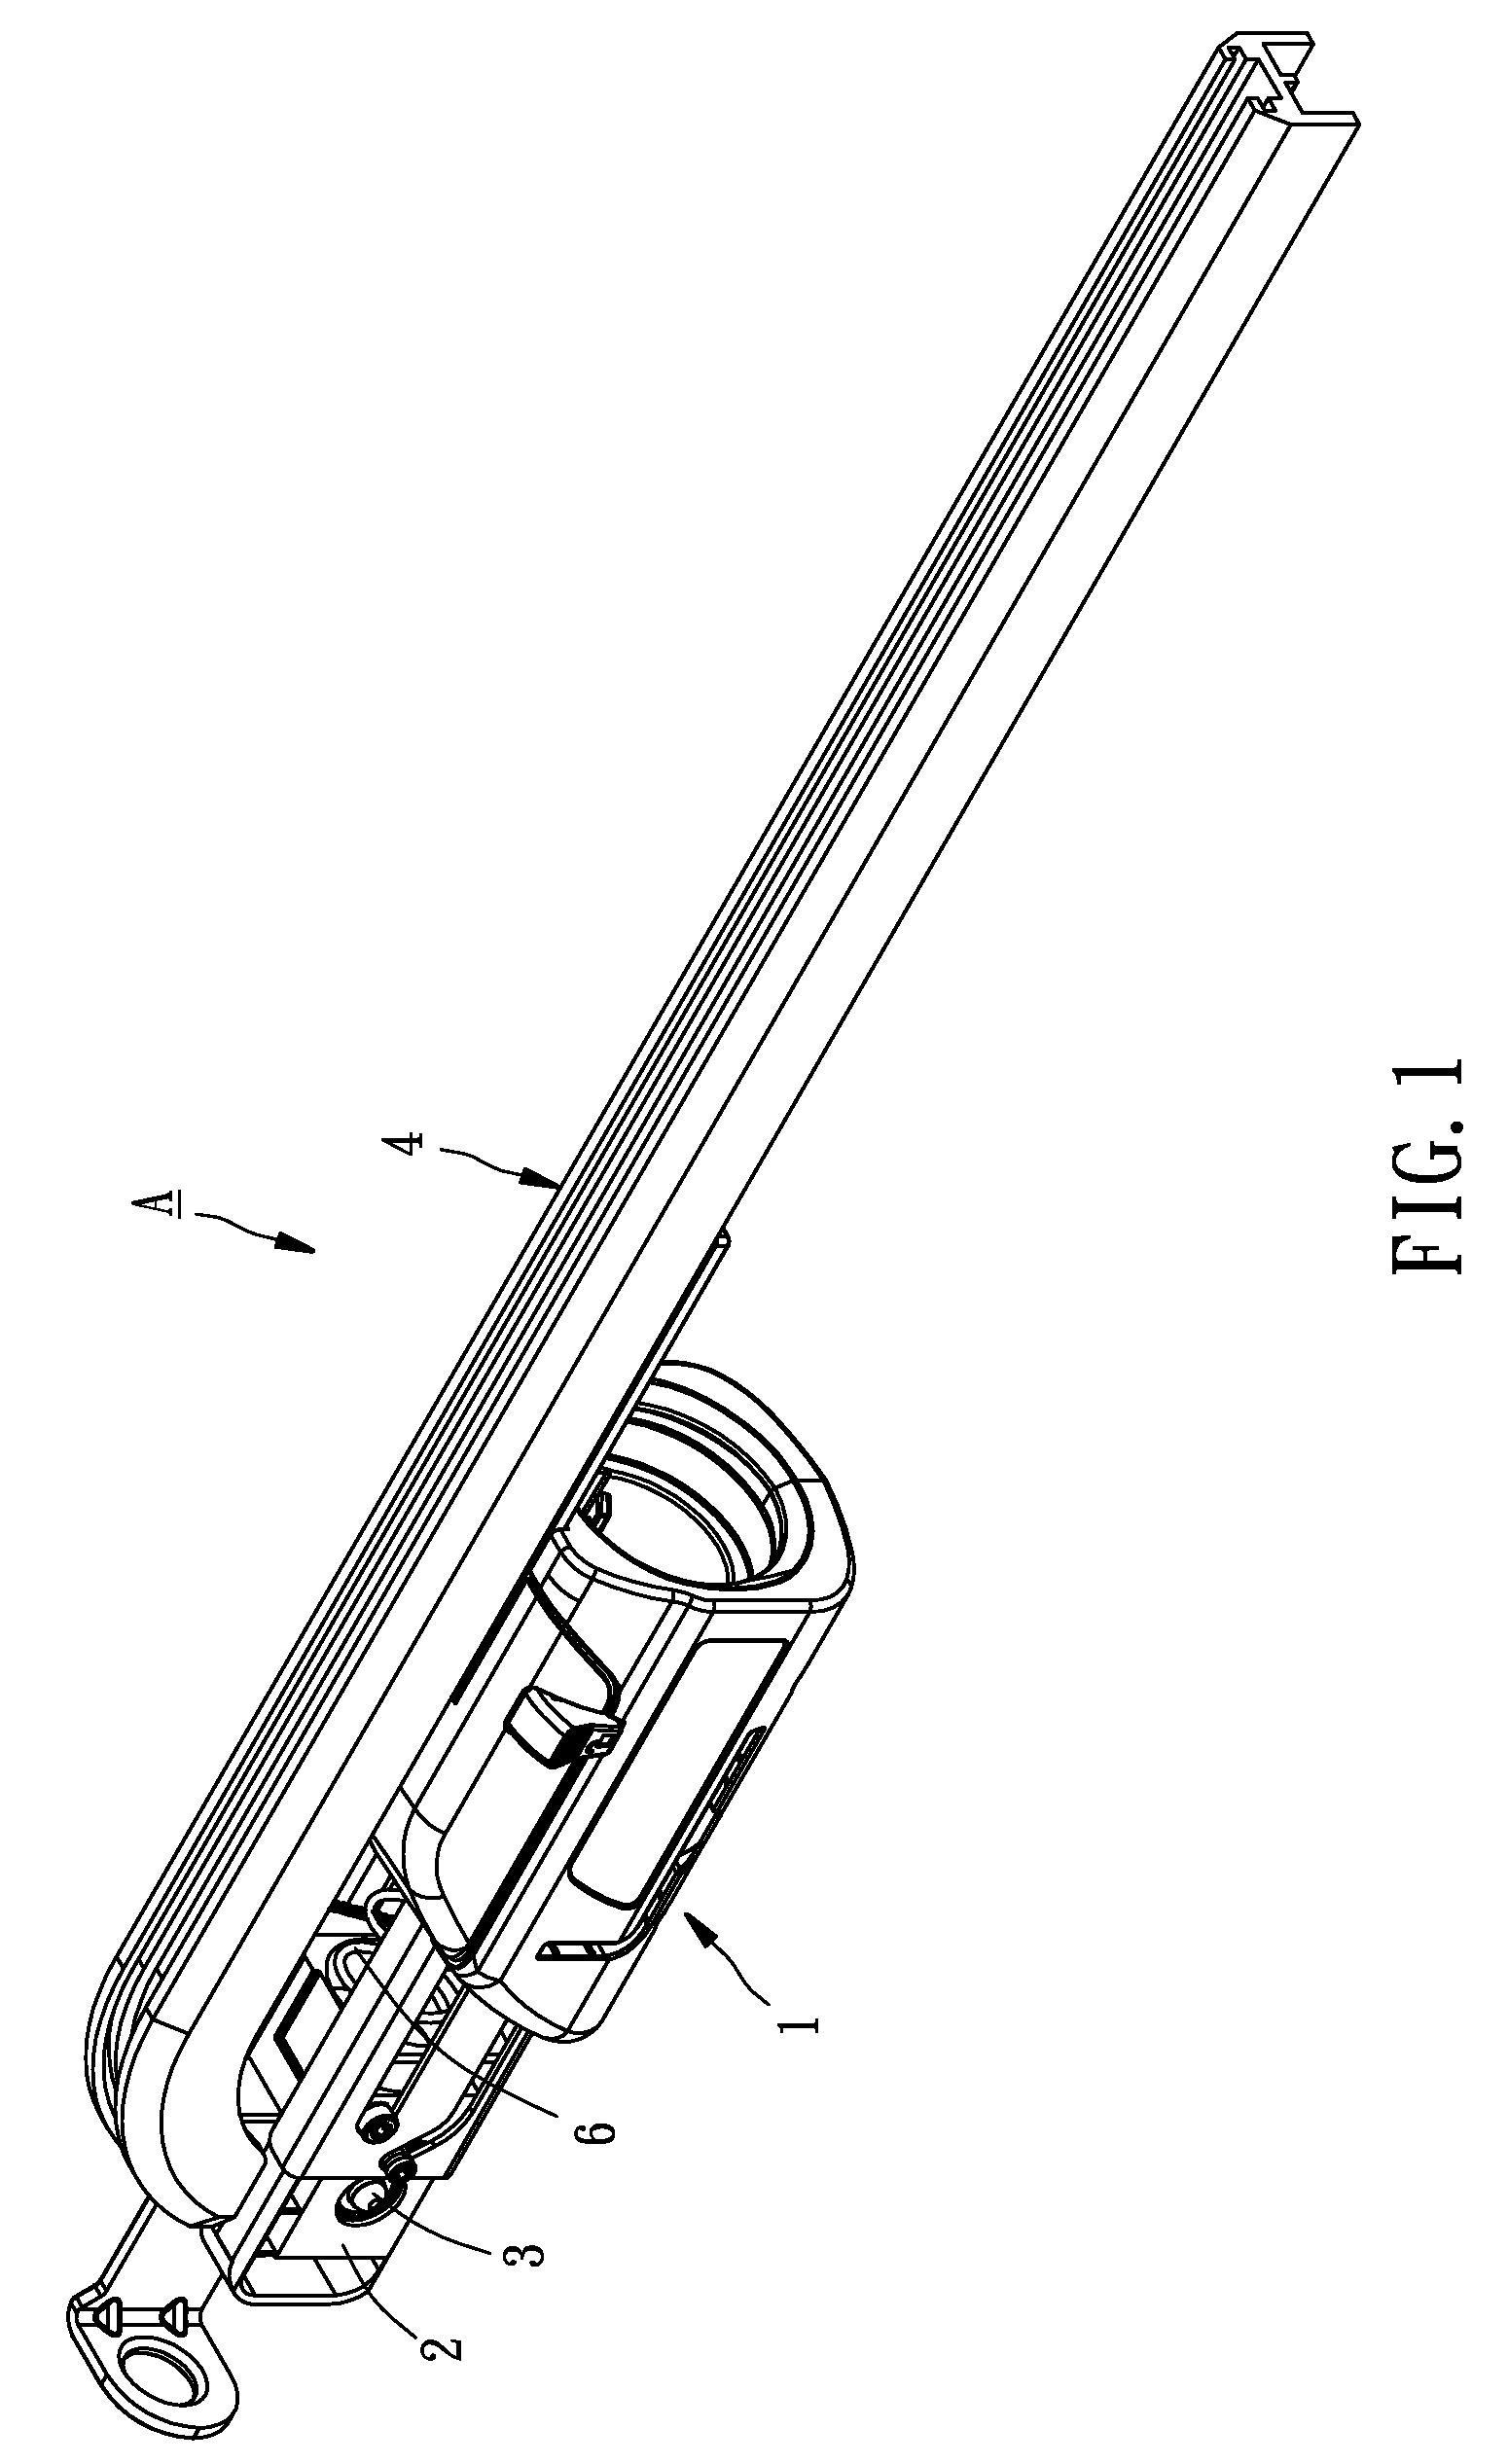 Automatic screw feeding apparatus for power screwdriver